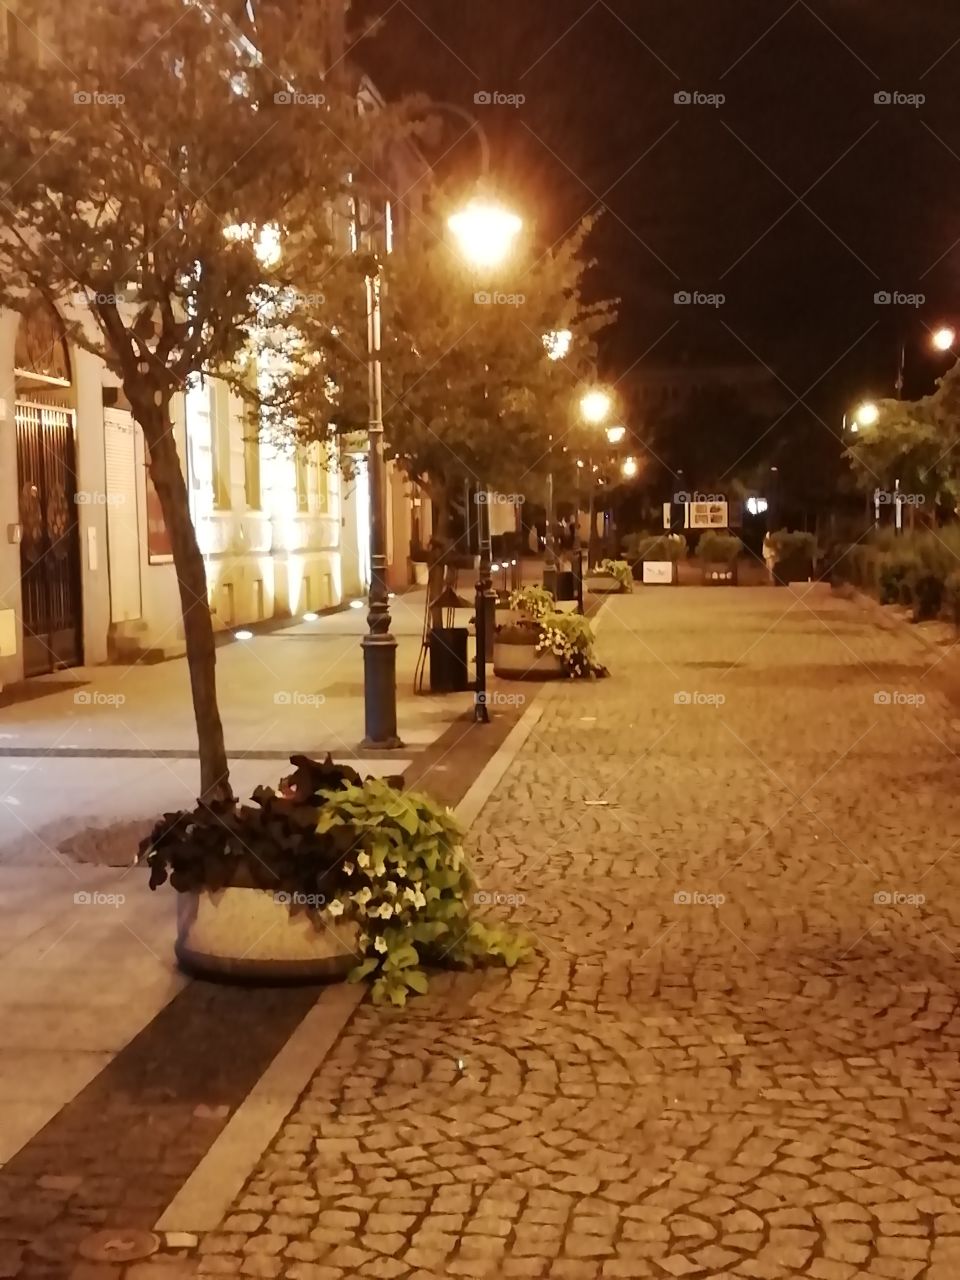 Evening streets of Nowa Sól.  Central street in Nowa Sól.
Вечерние улици города Nowa Sól. Центральная улица в Nowa Sól.